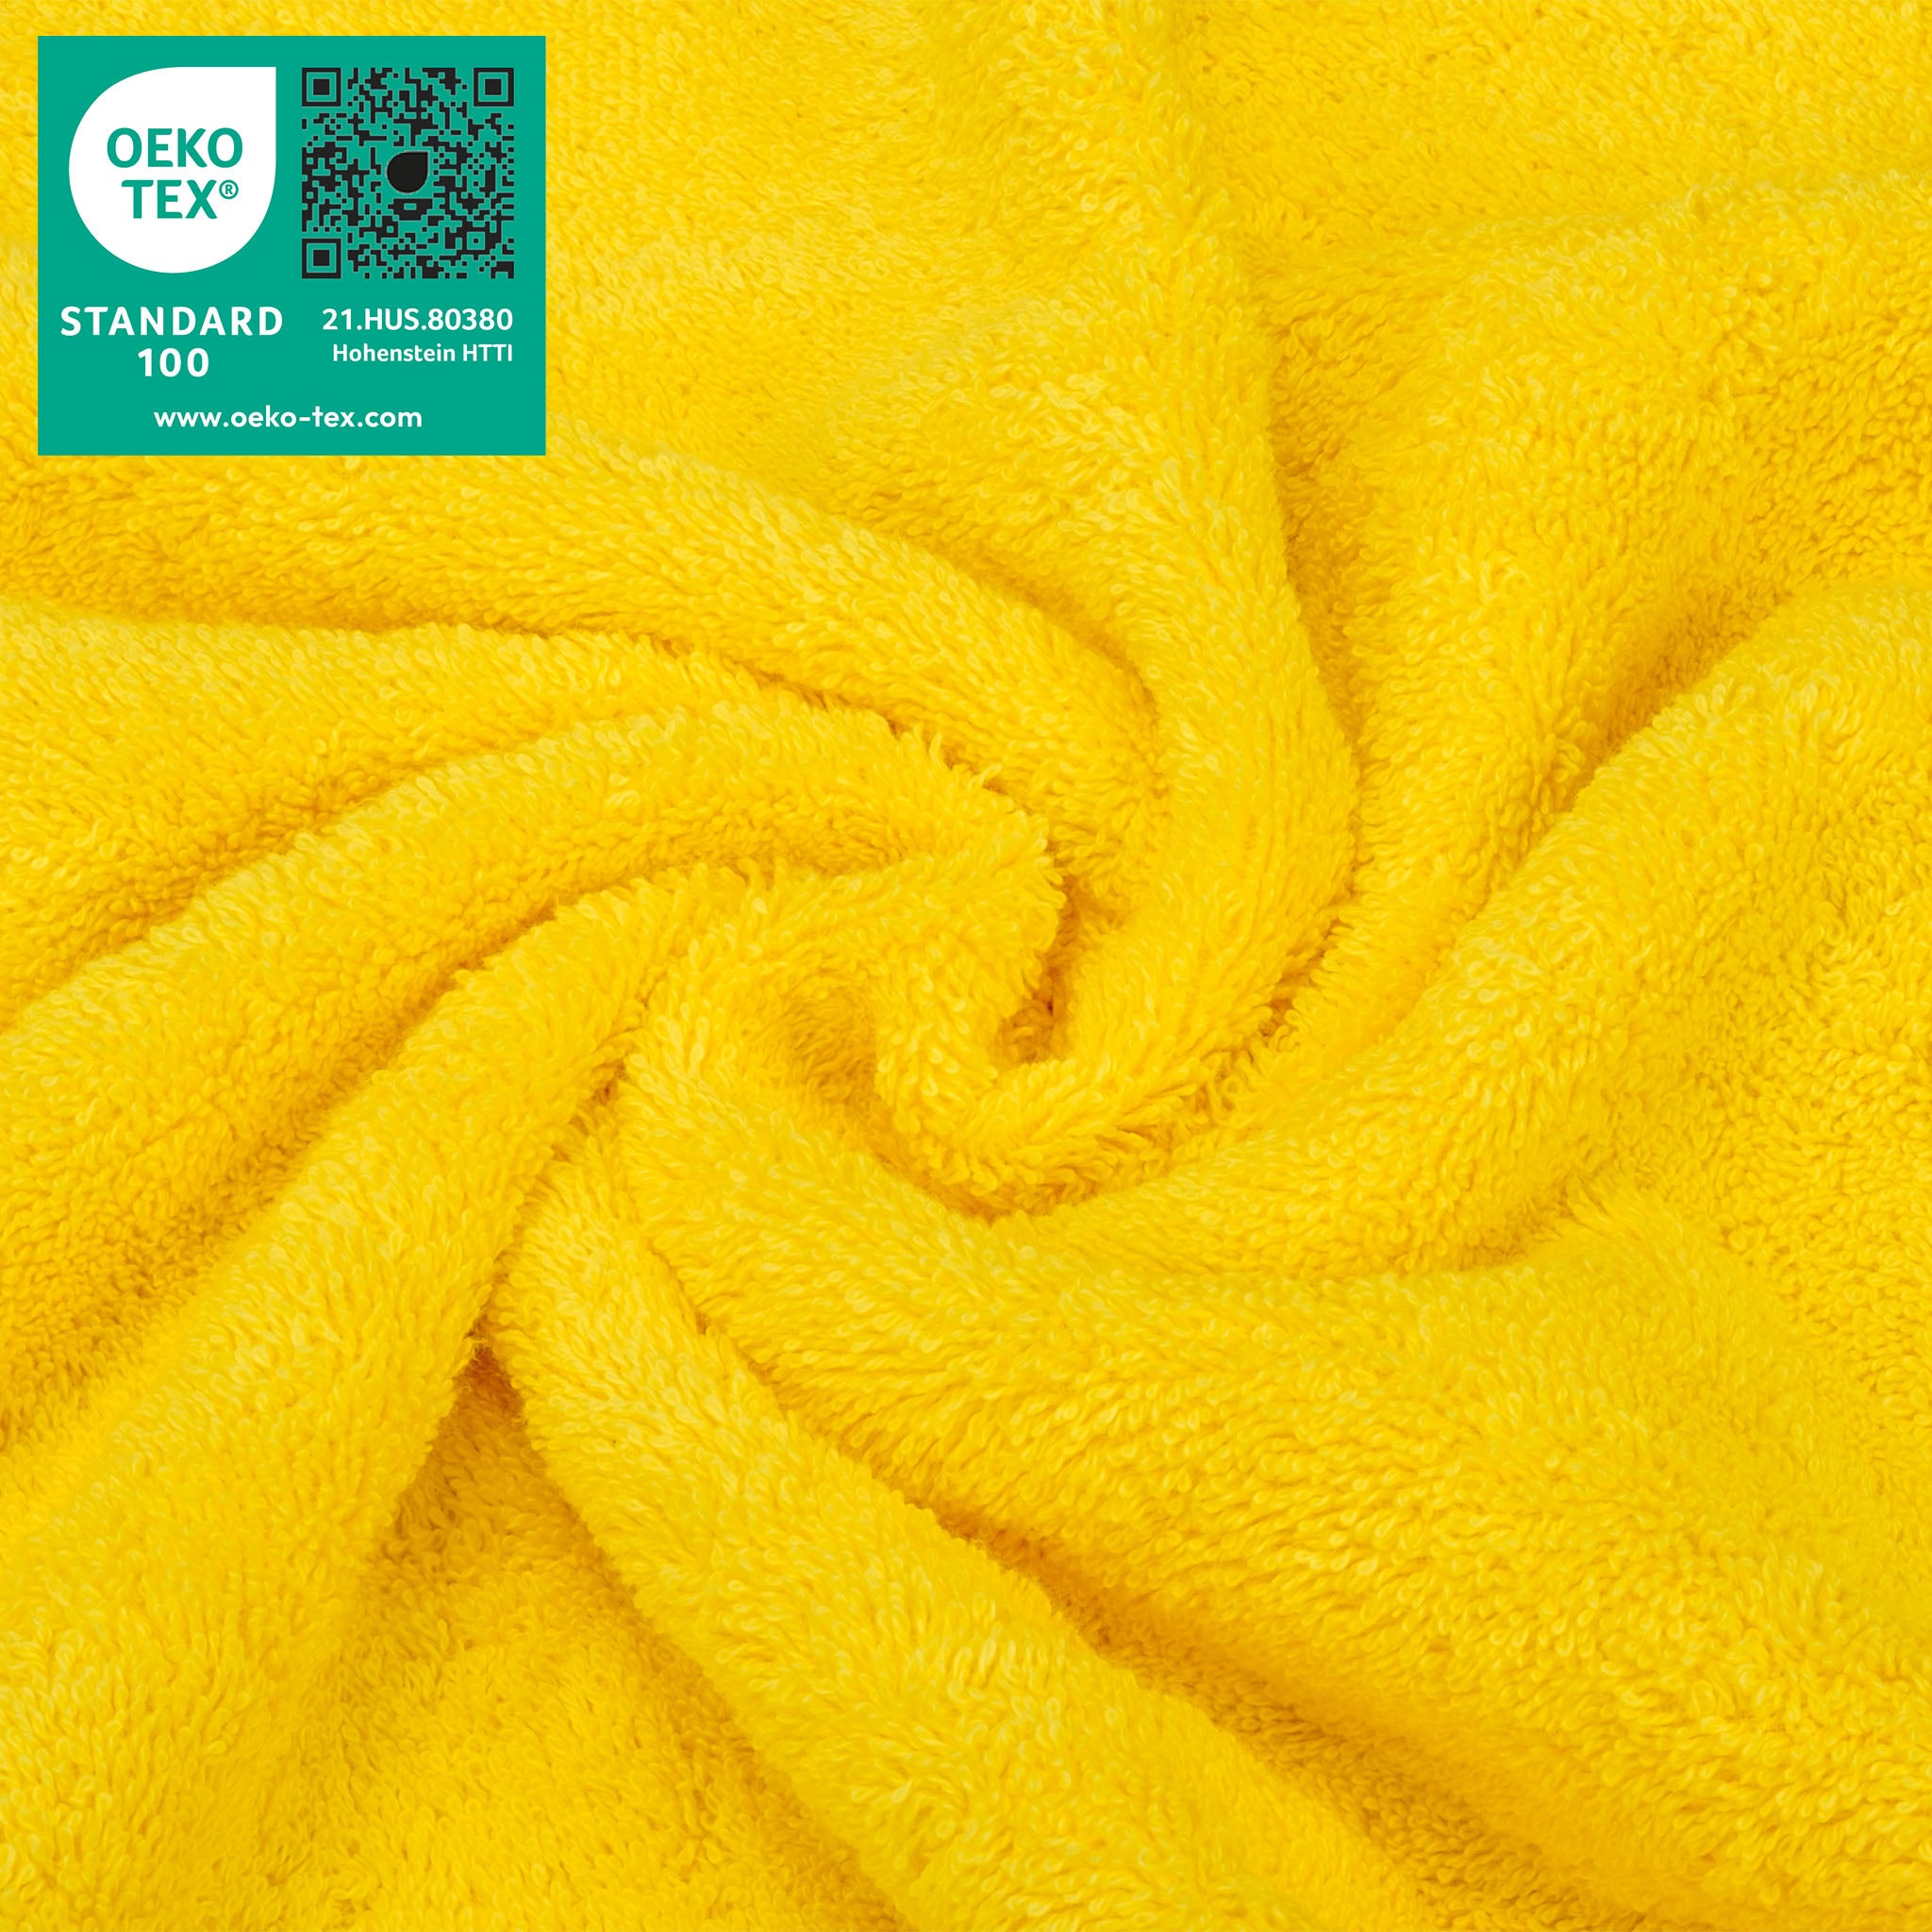 American Soft Linen 100% Turkish Cotton 4 Piece Washcloth Set malibu-yellow-3